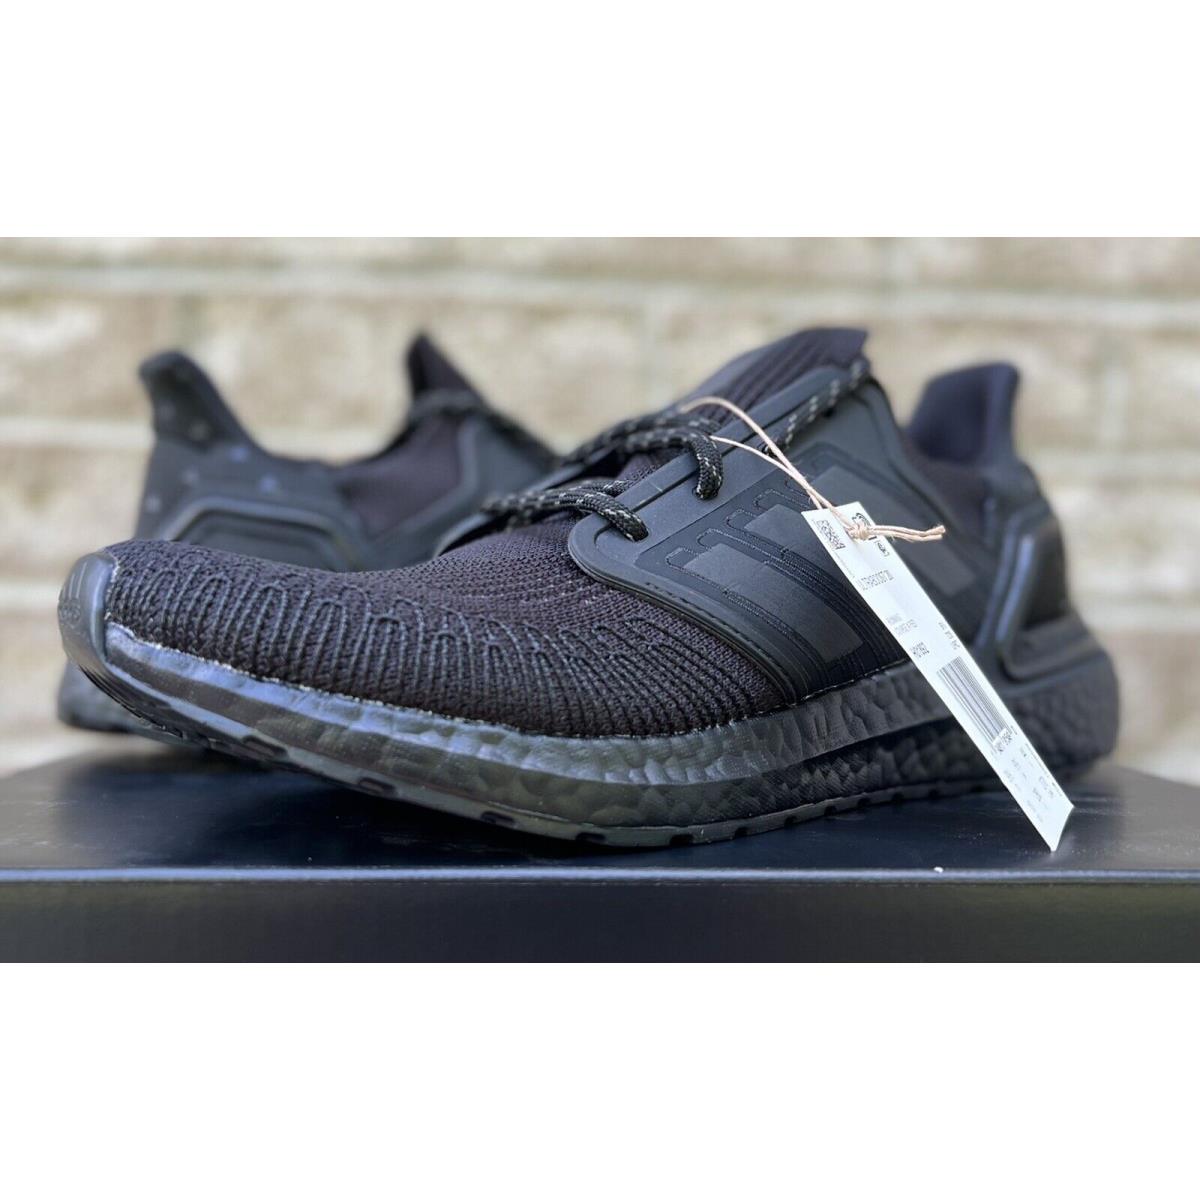 Adidas shoes UltraBoost - TRIPLE BLACK 2